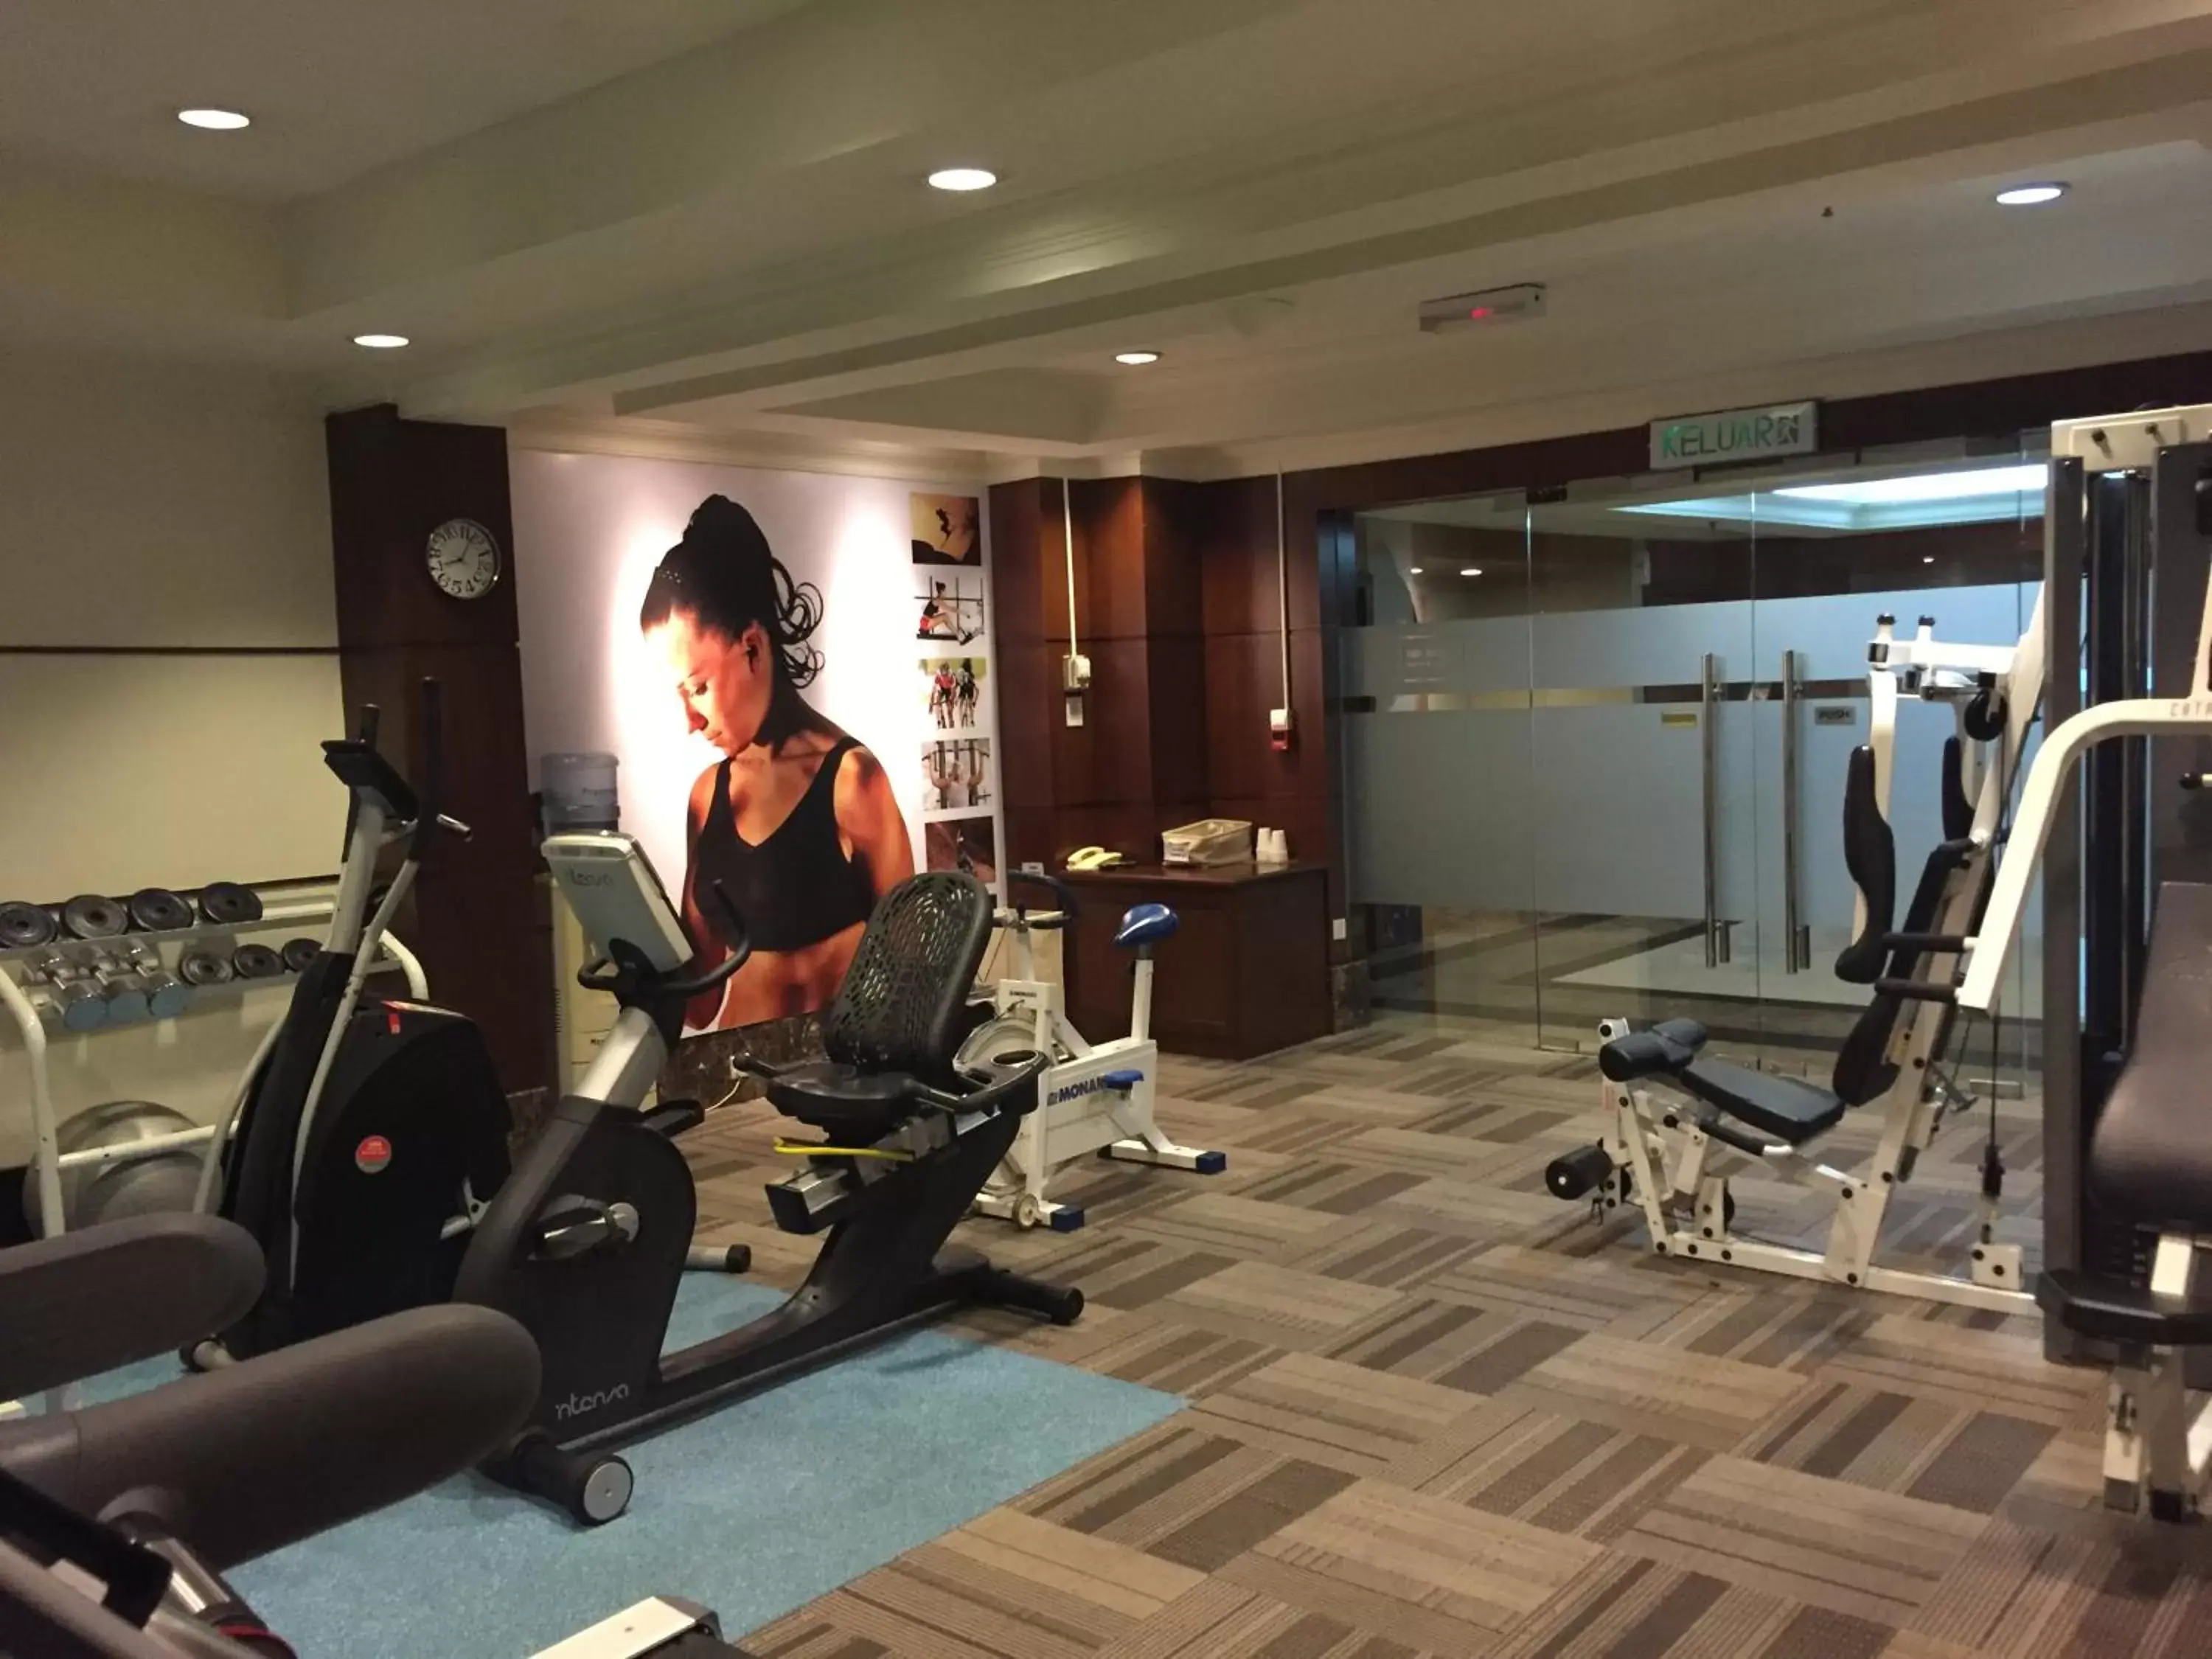 Fitness centre/facilities, Fitness Center/Facilities in Hotel Armada Petaling Jaya